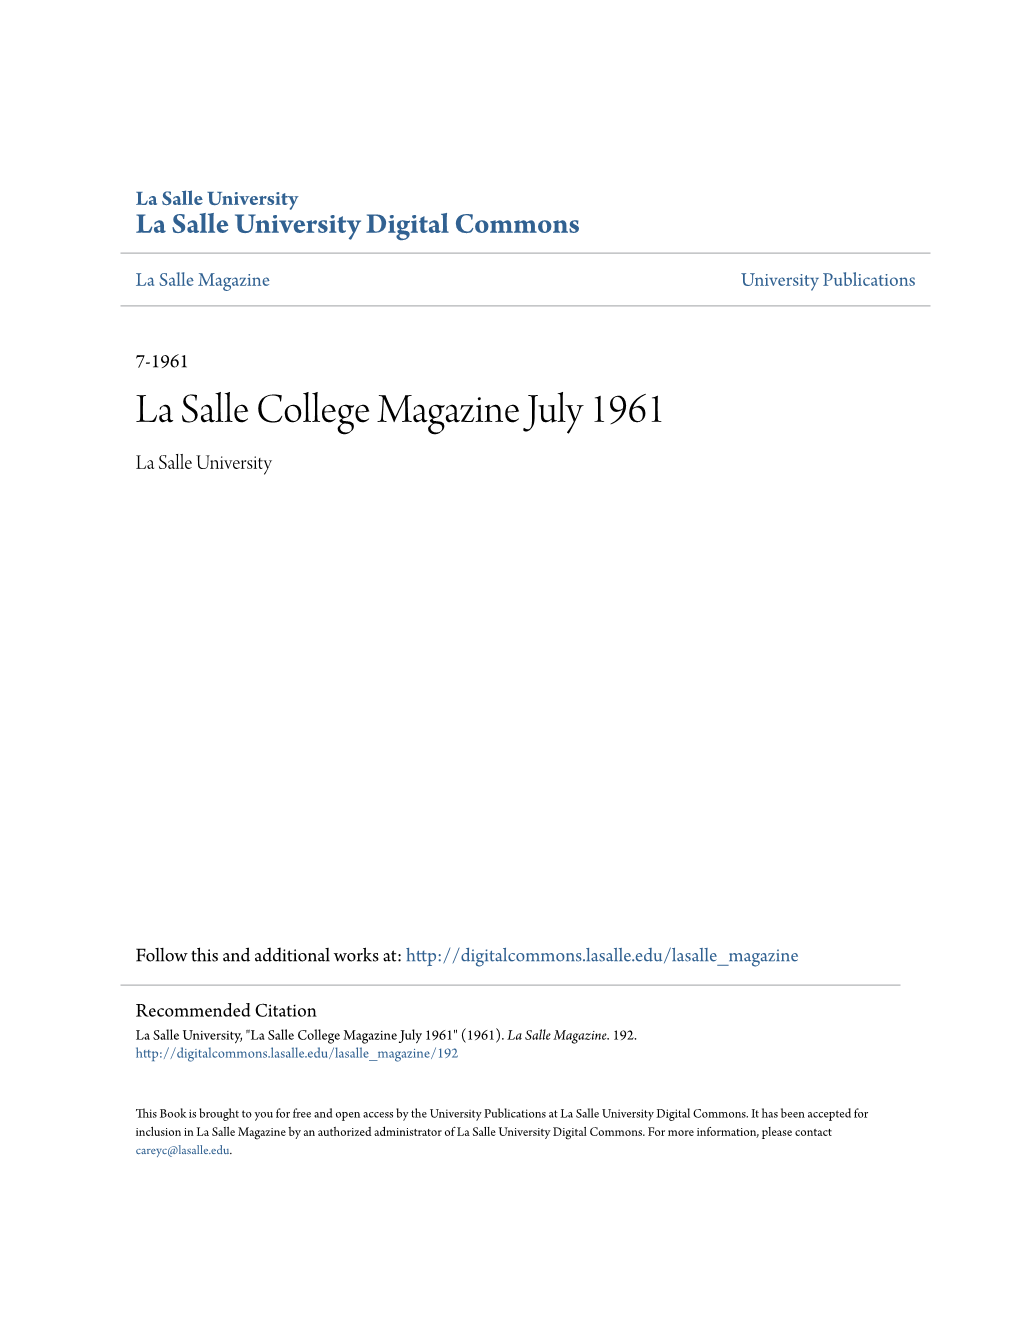 La Salle College Magazine July 1961 La Salle University